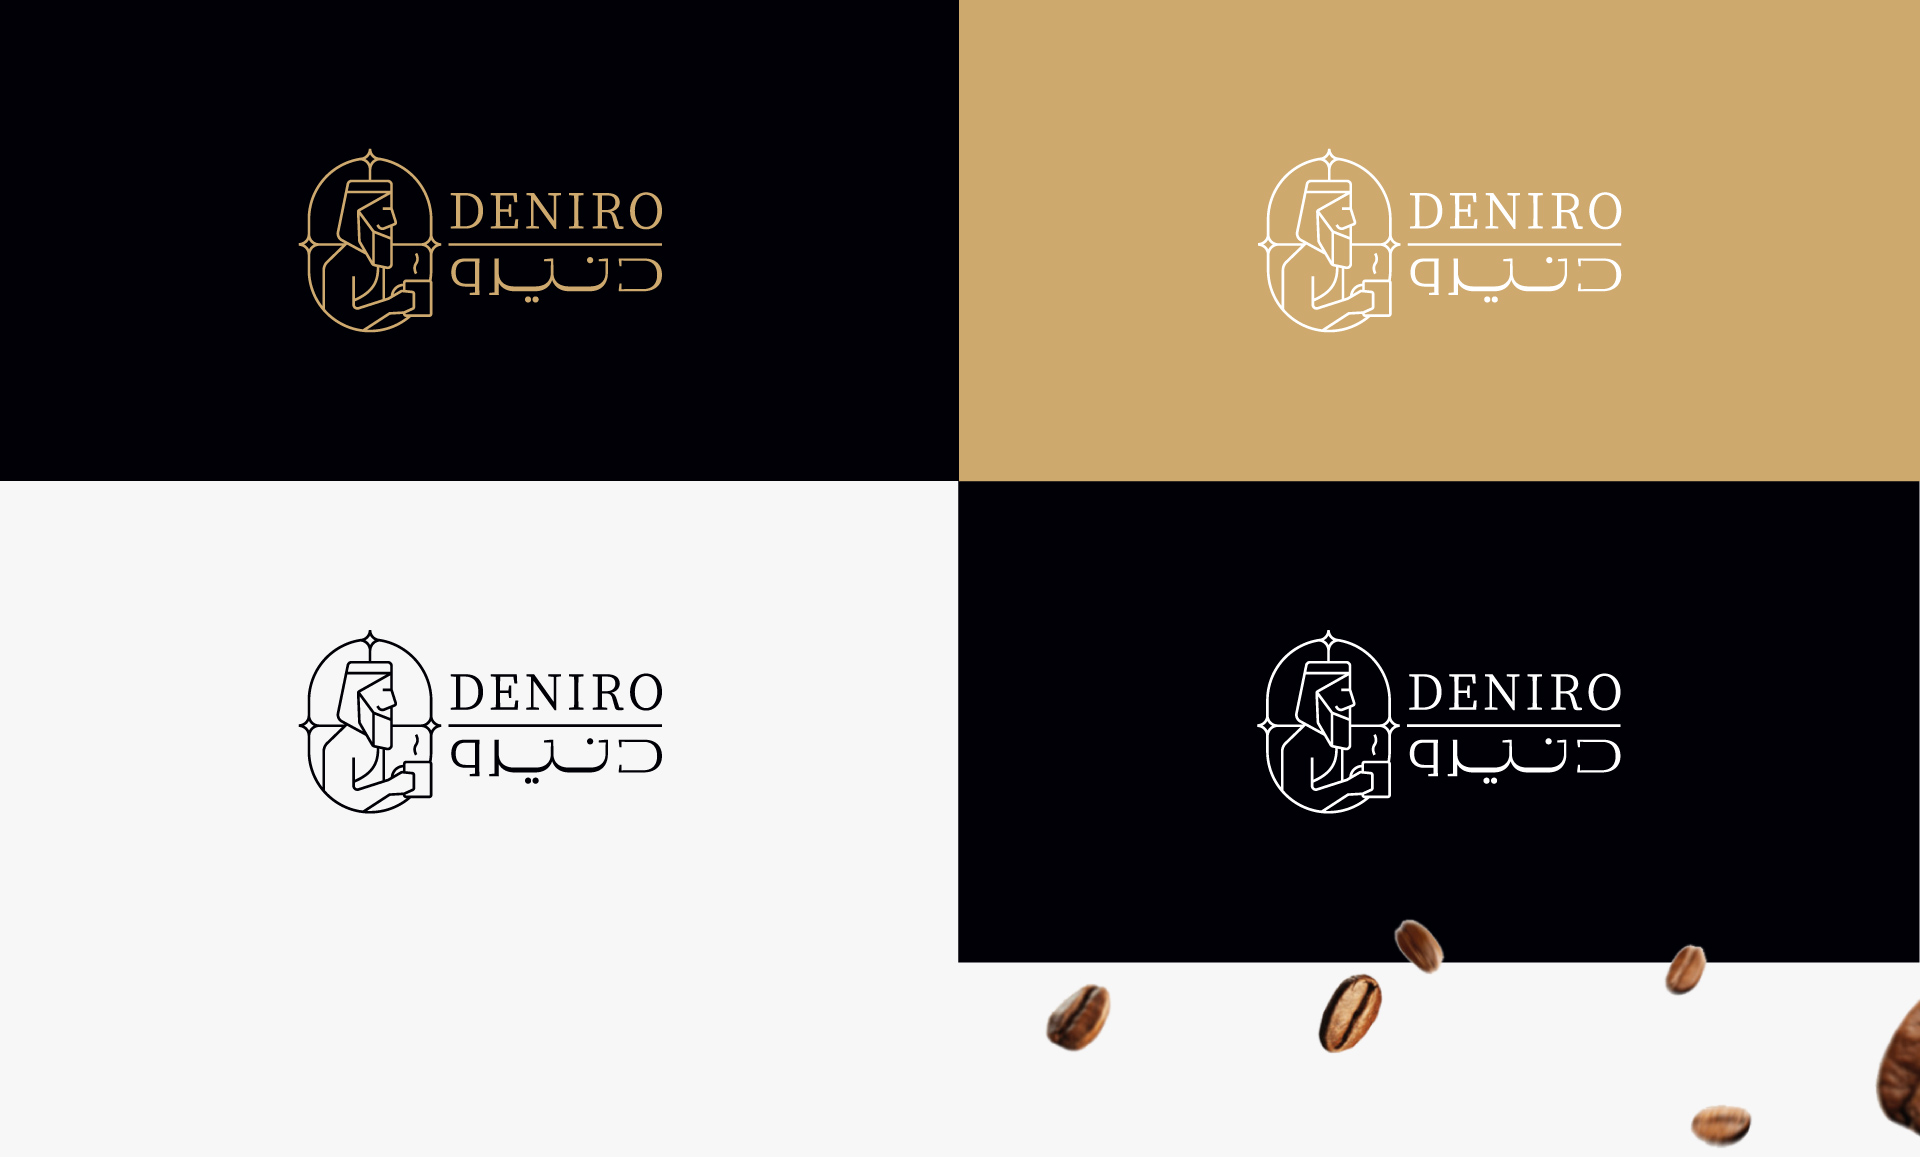 Deniro - Brand Identity Design